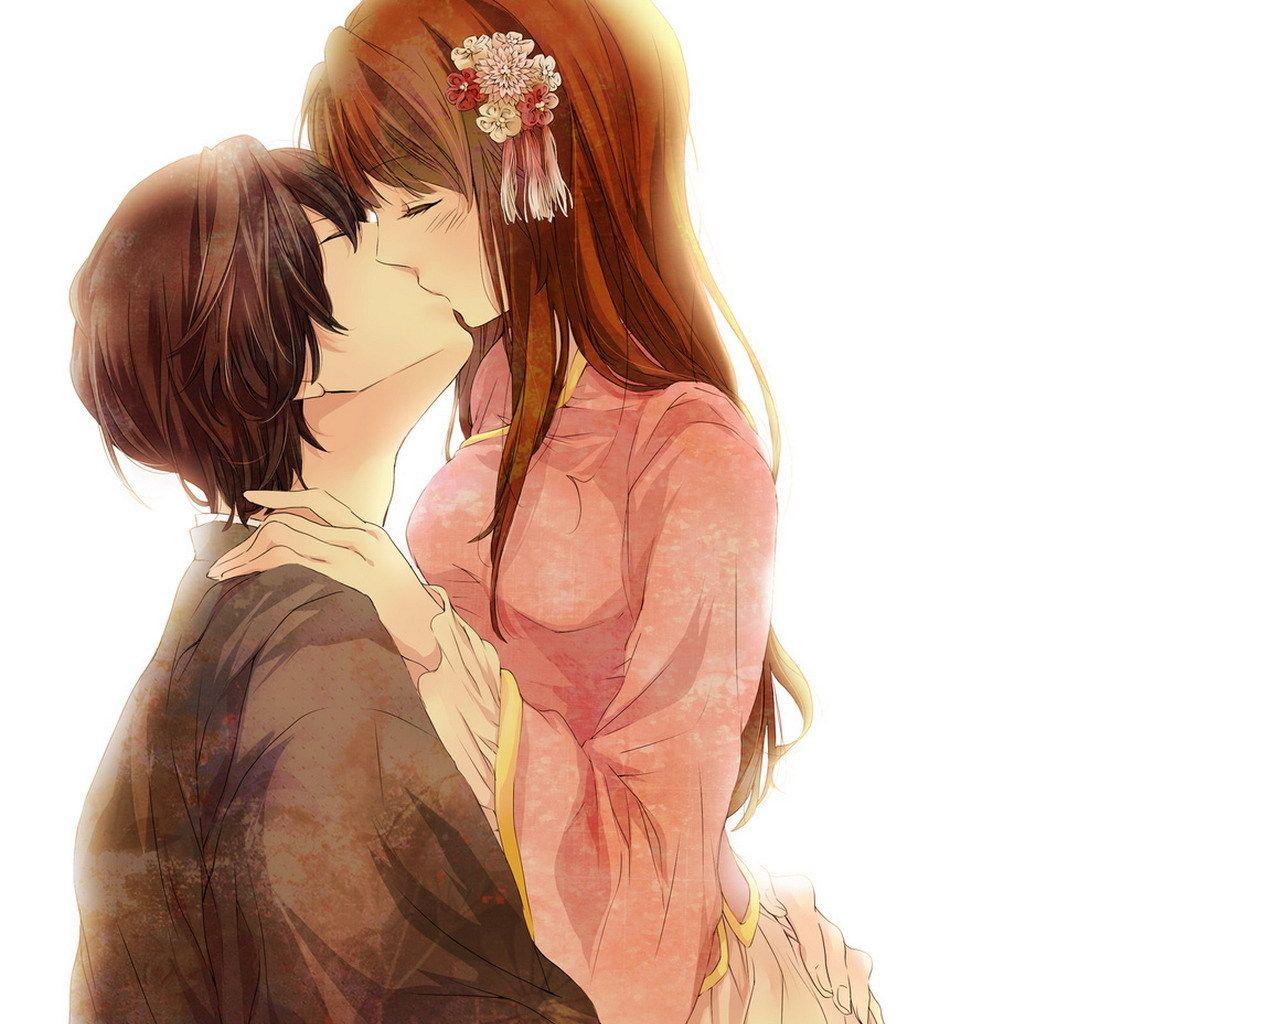 anime kiss - Other & Anime Background Wallpapers on Desktop Nexus (Image  835230)